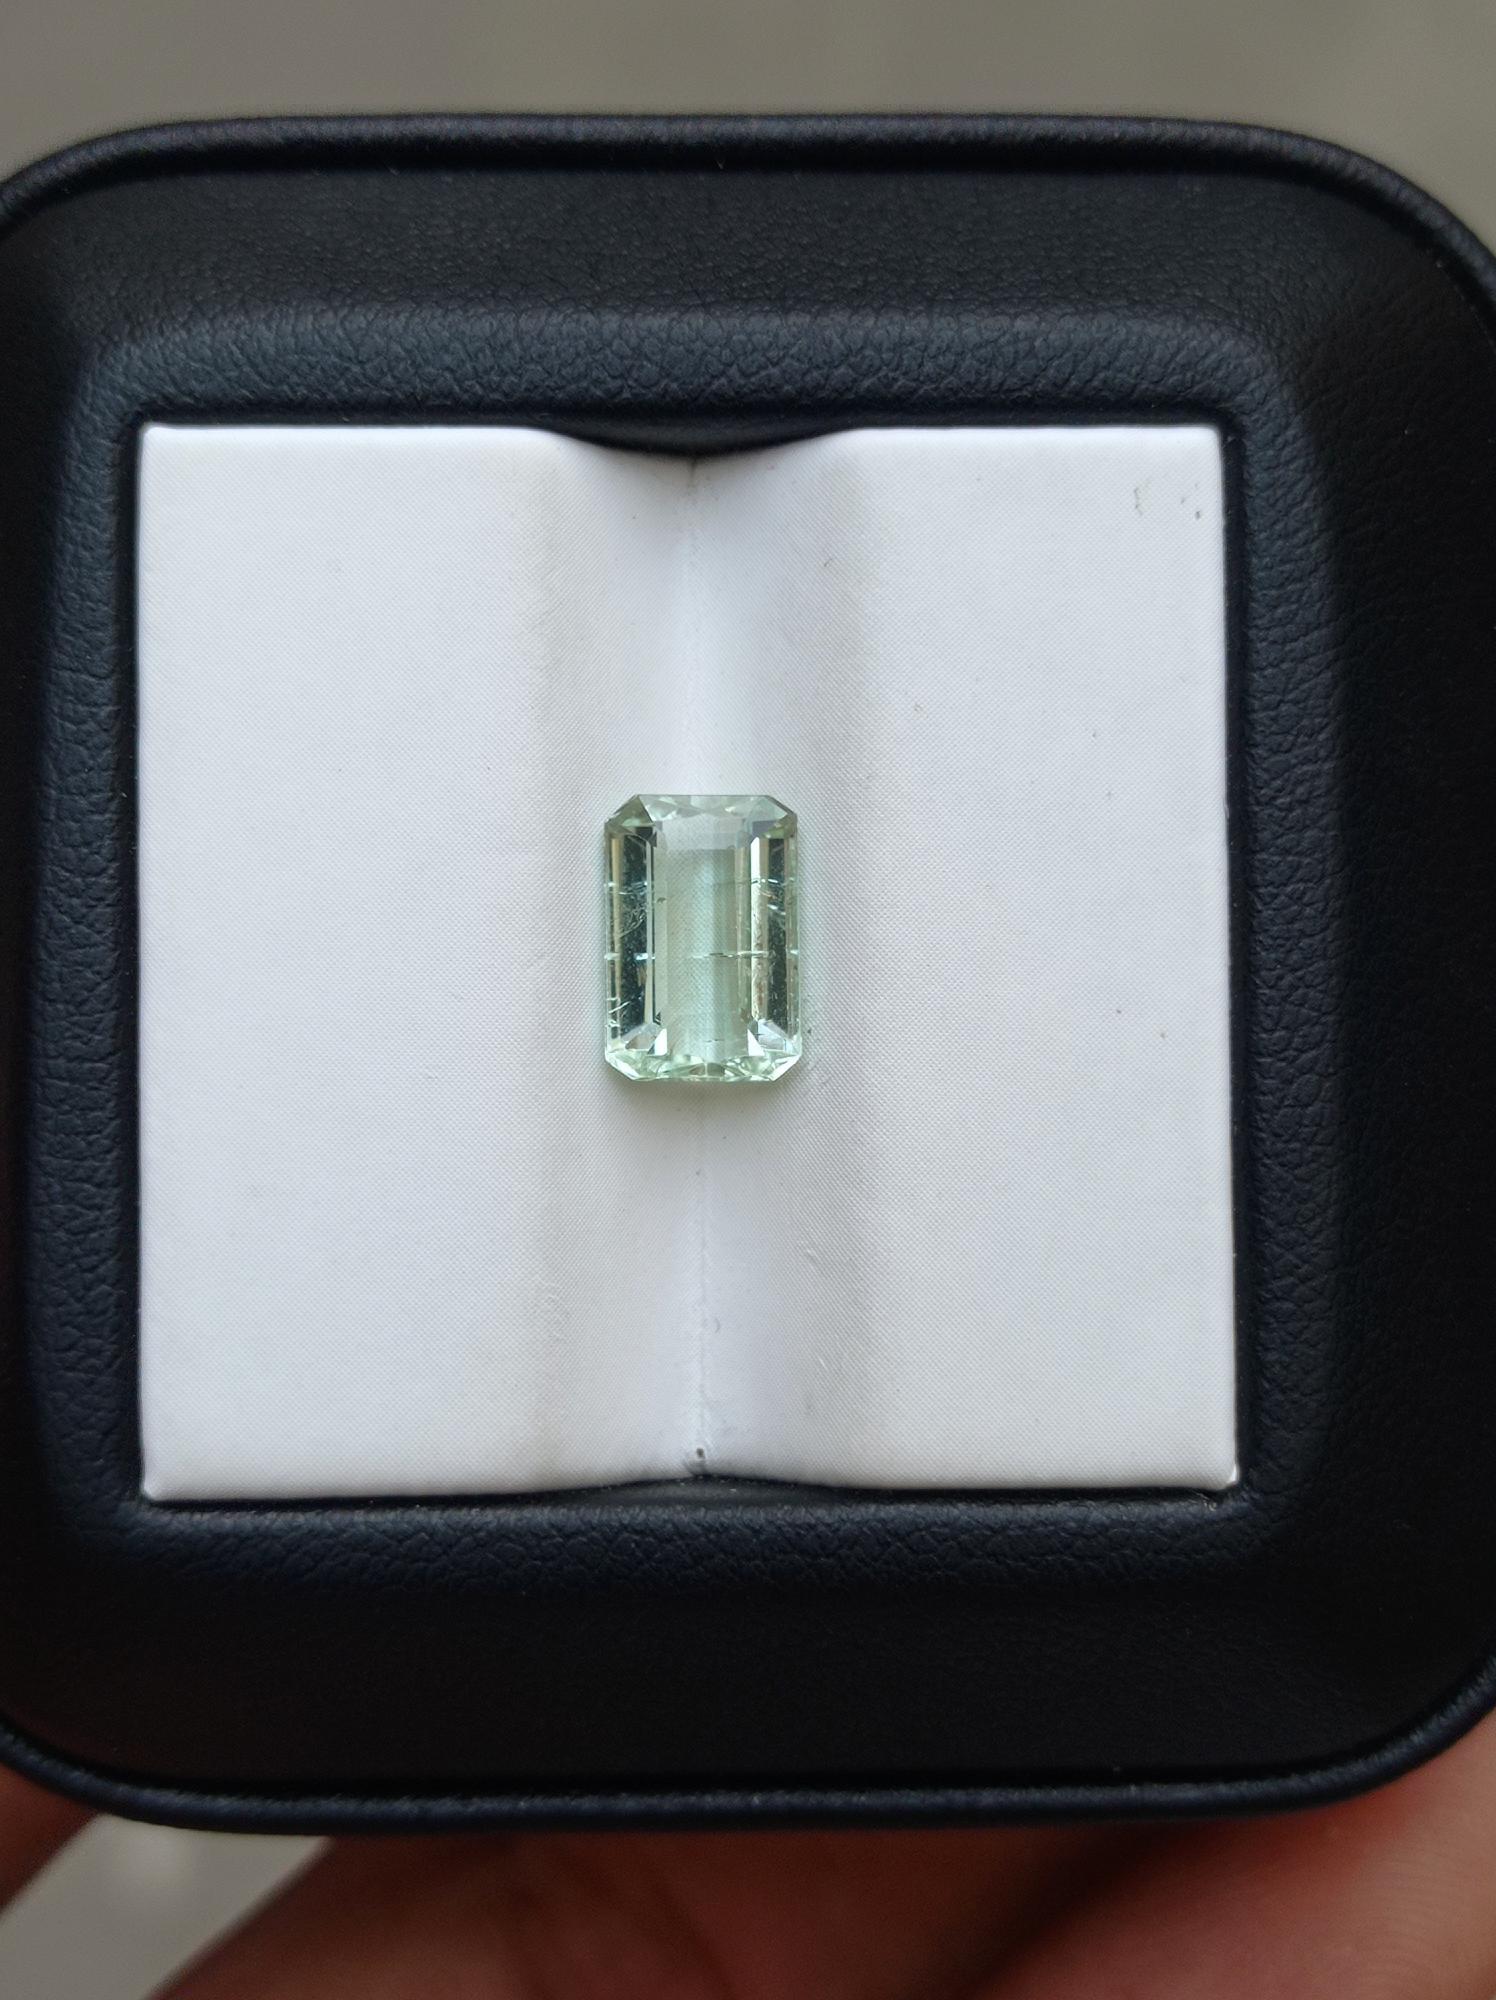 2.25ct Natural Light Green Tourmaline Gemstone - October Birthstone - 9x6x4mm